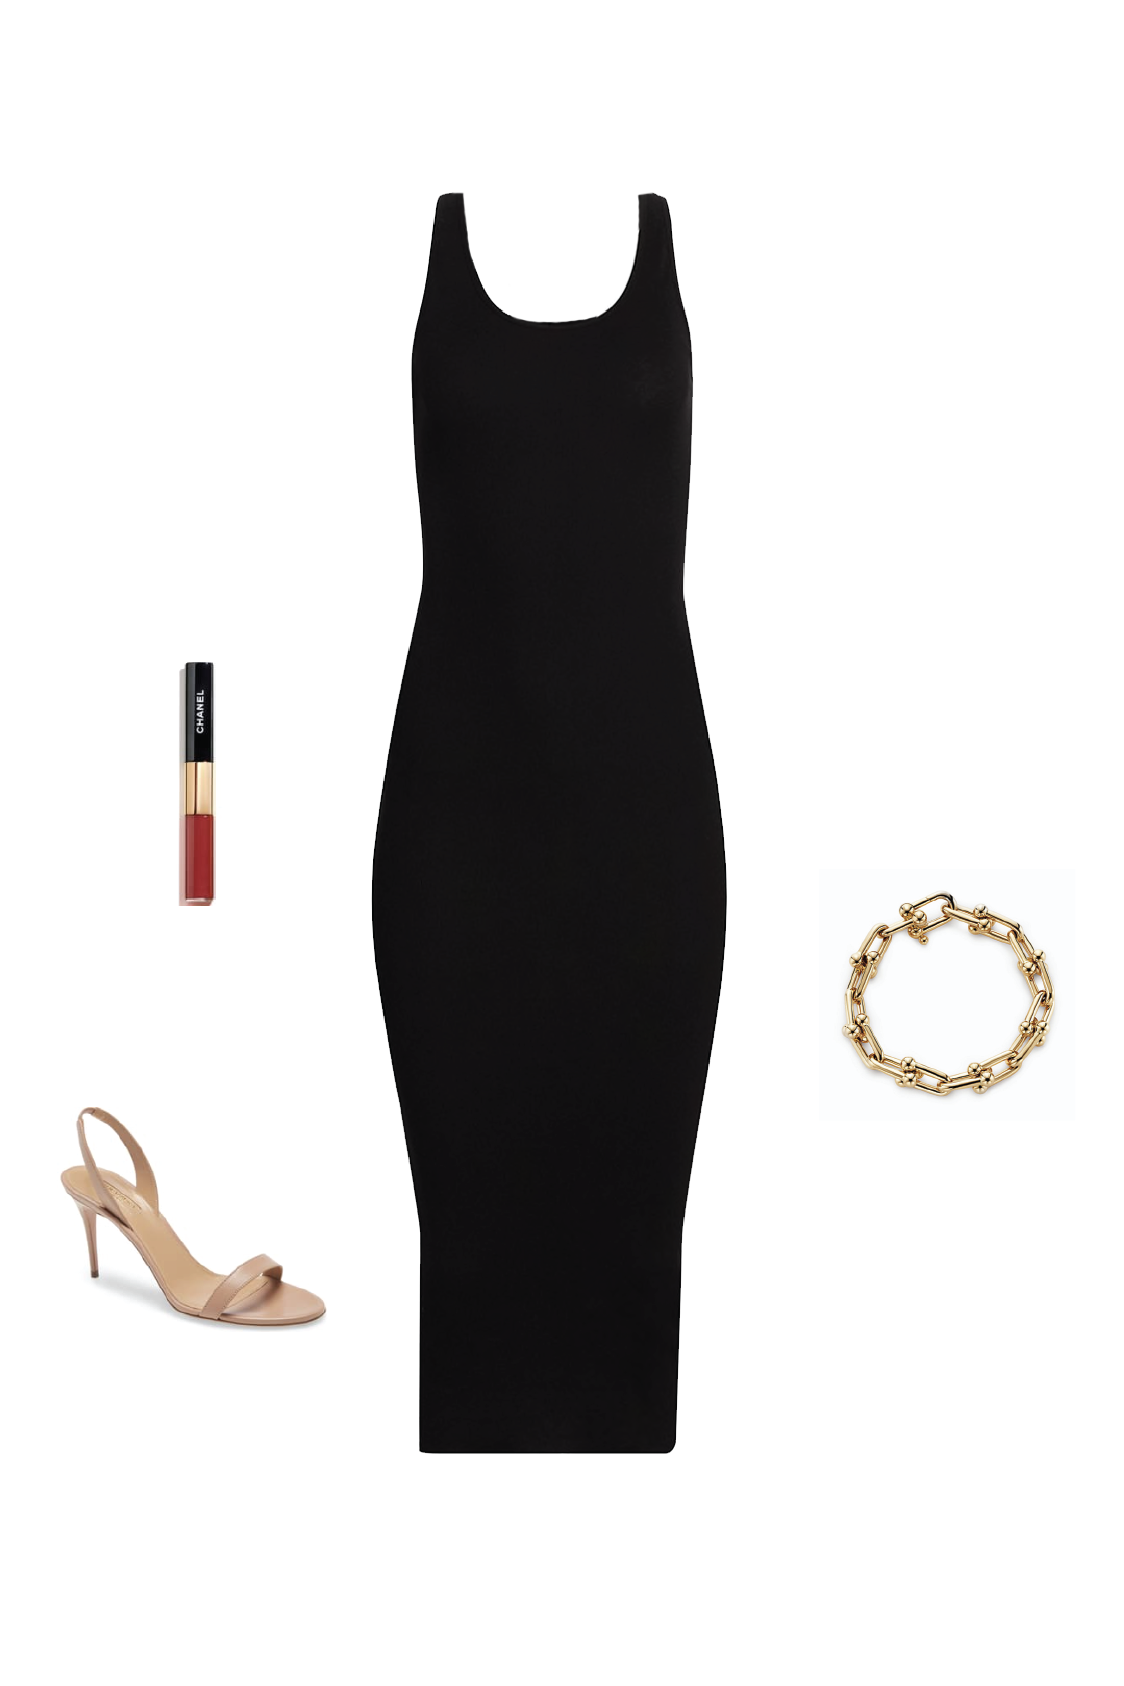 Glow Fashion Boutique Sleeveless Black Bodycon Dress styling